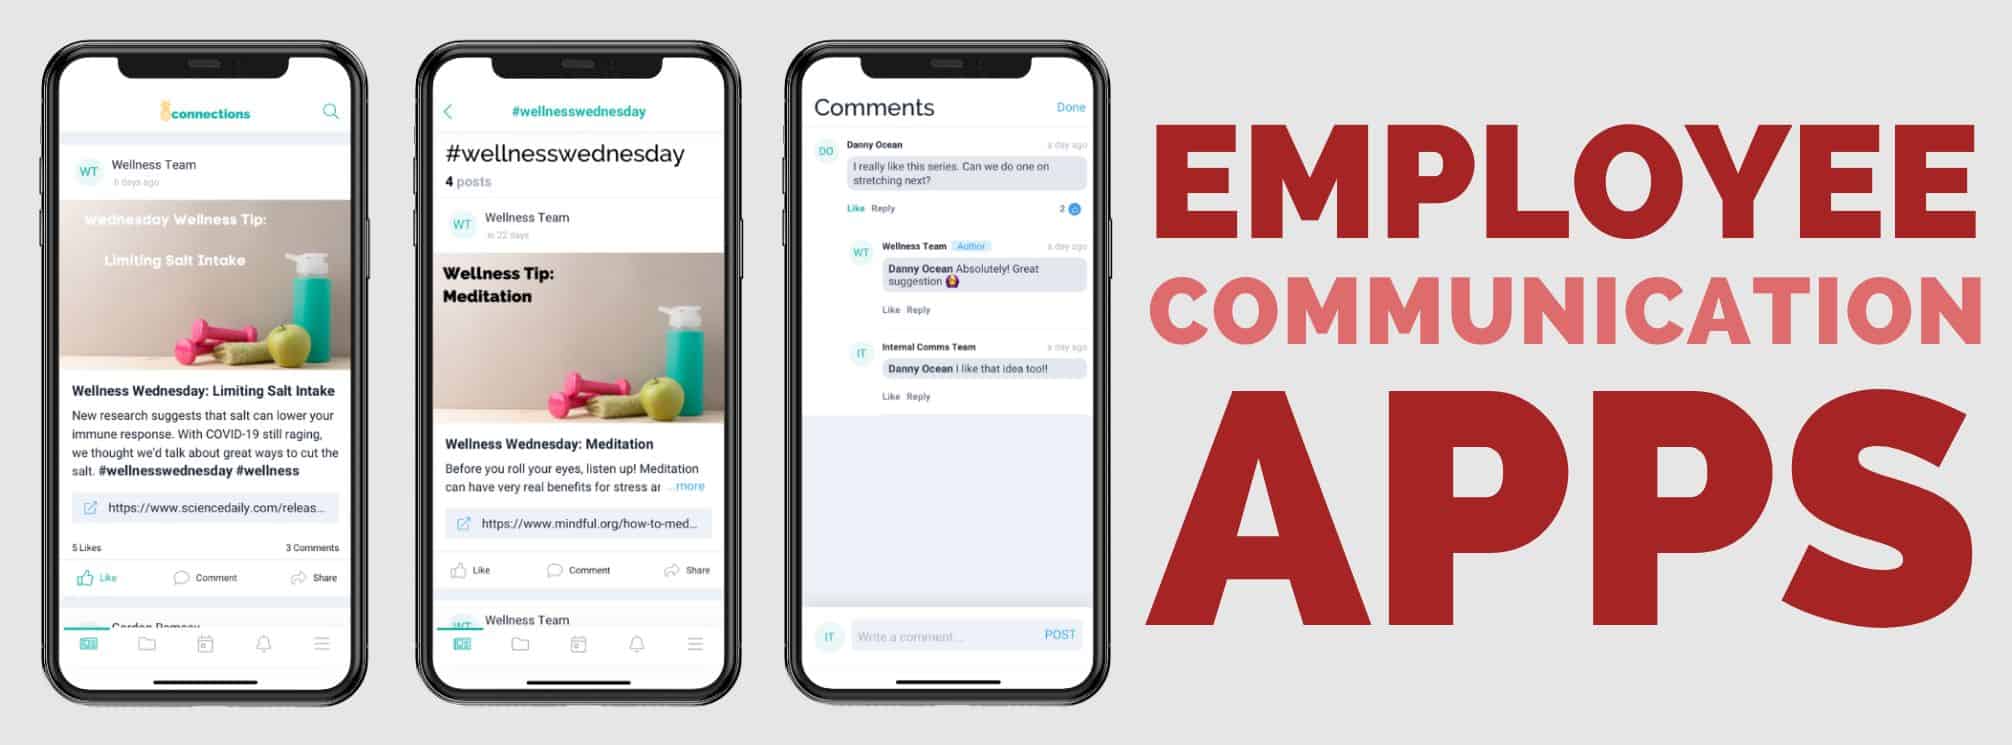 app screens from theEMPLOYEEapp's employee communications app